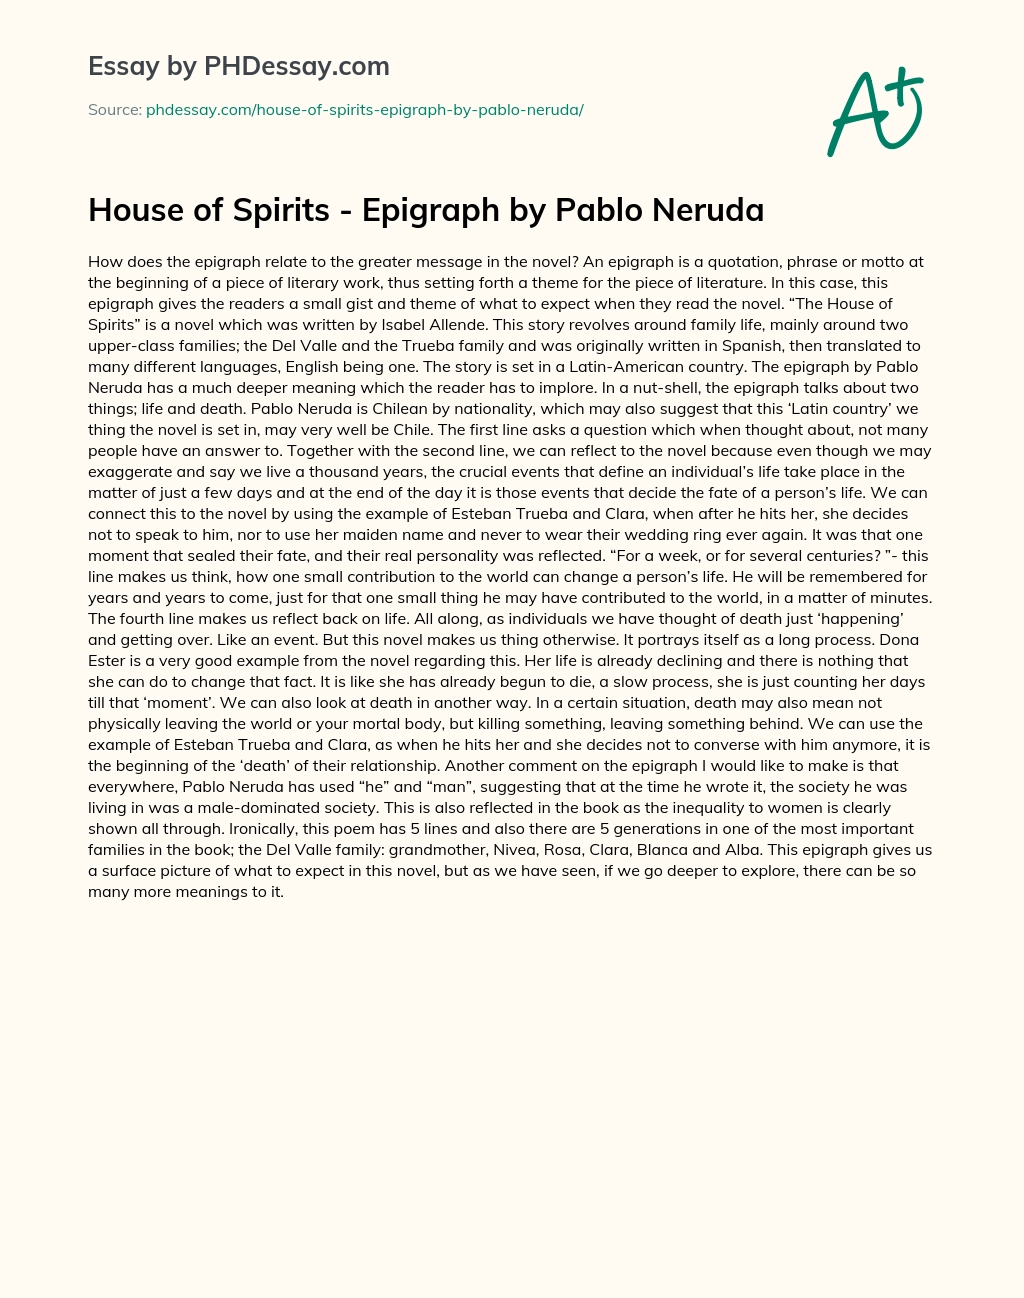 House of Spirits – Epigraph by Pablo Neruda essay